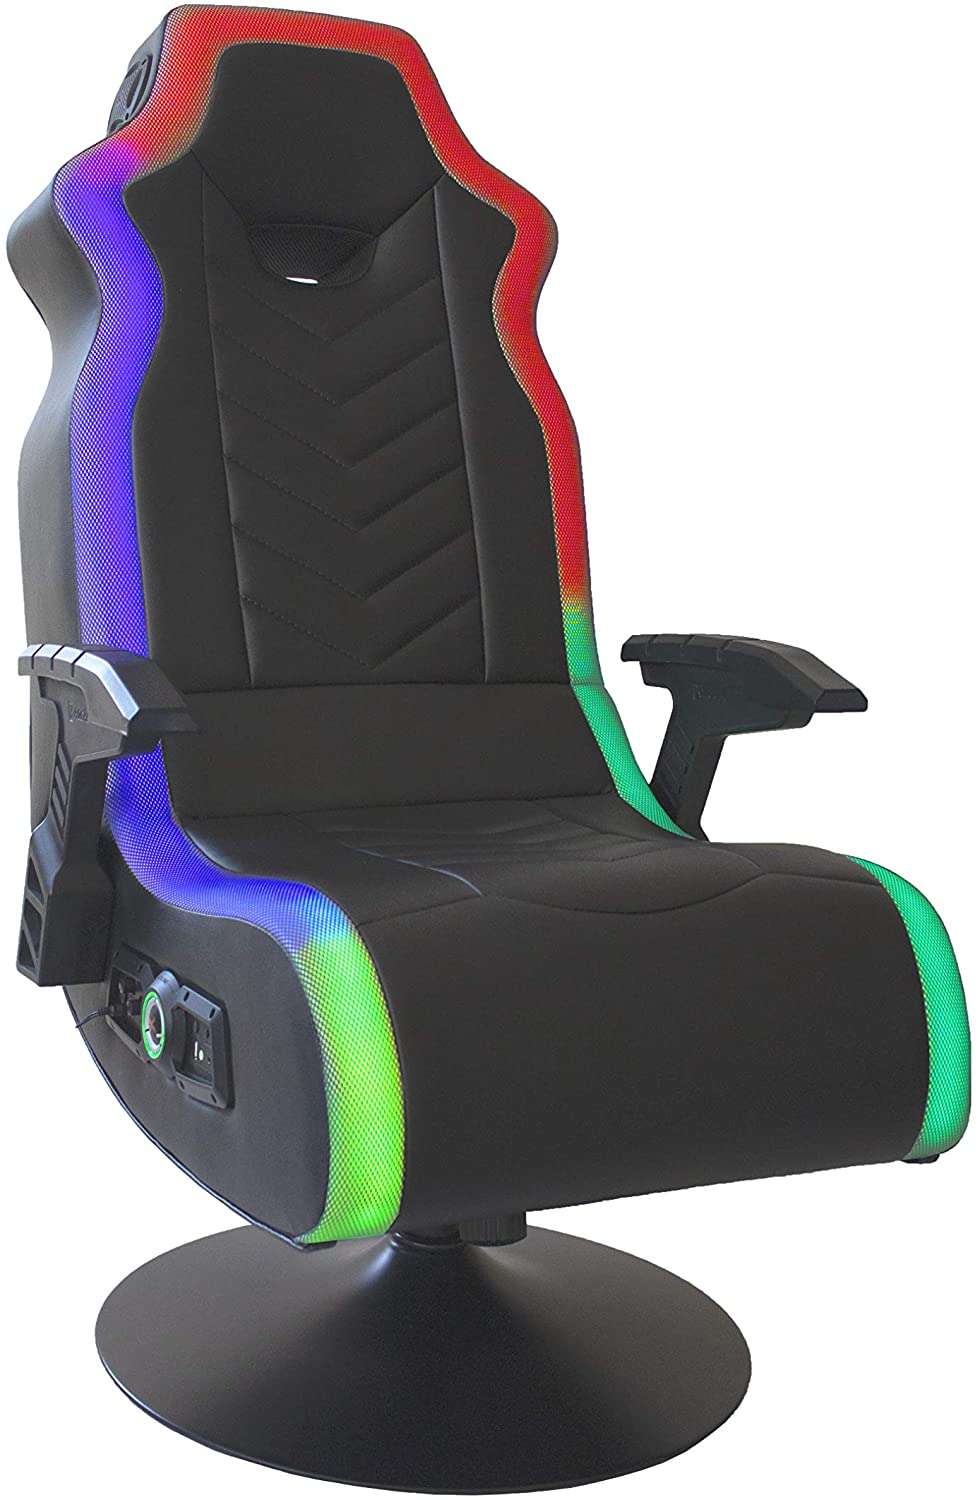 x rocker 5152401, rgb prism pedestal gaming chair